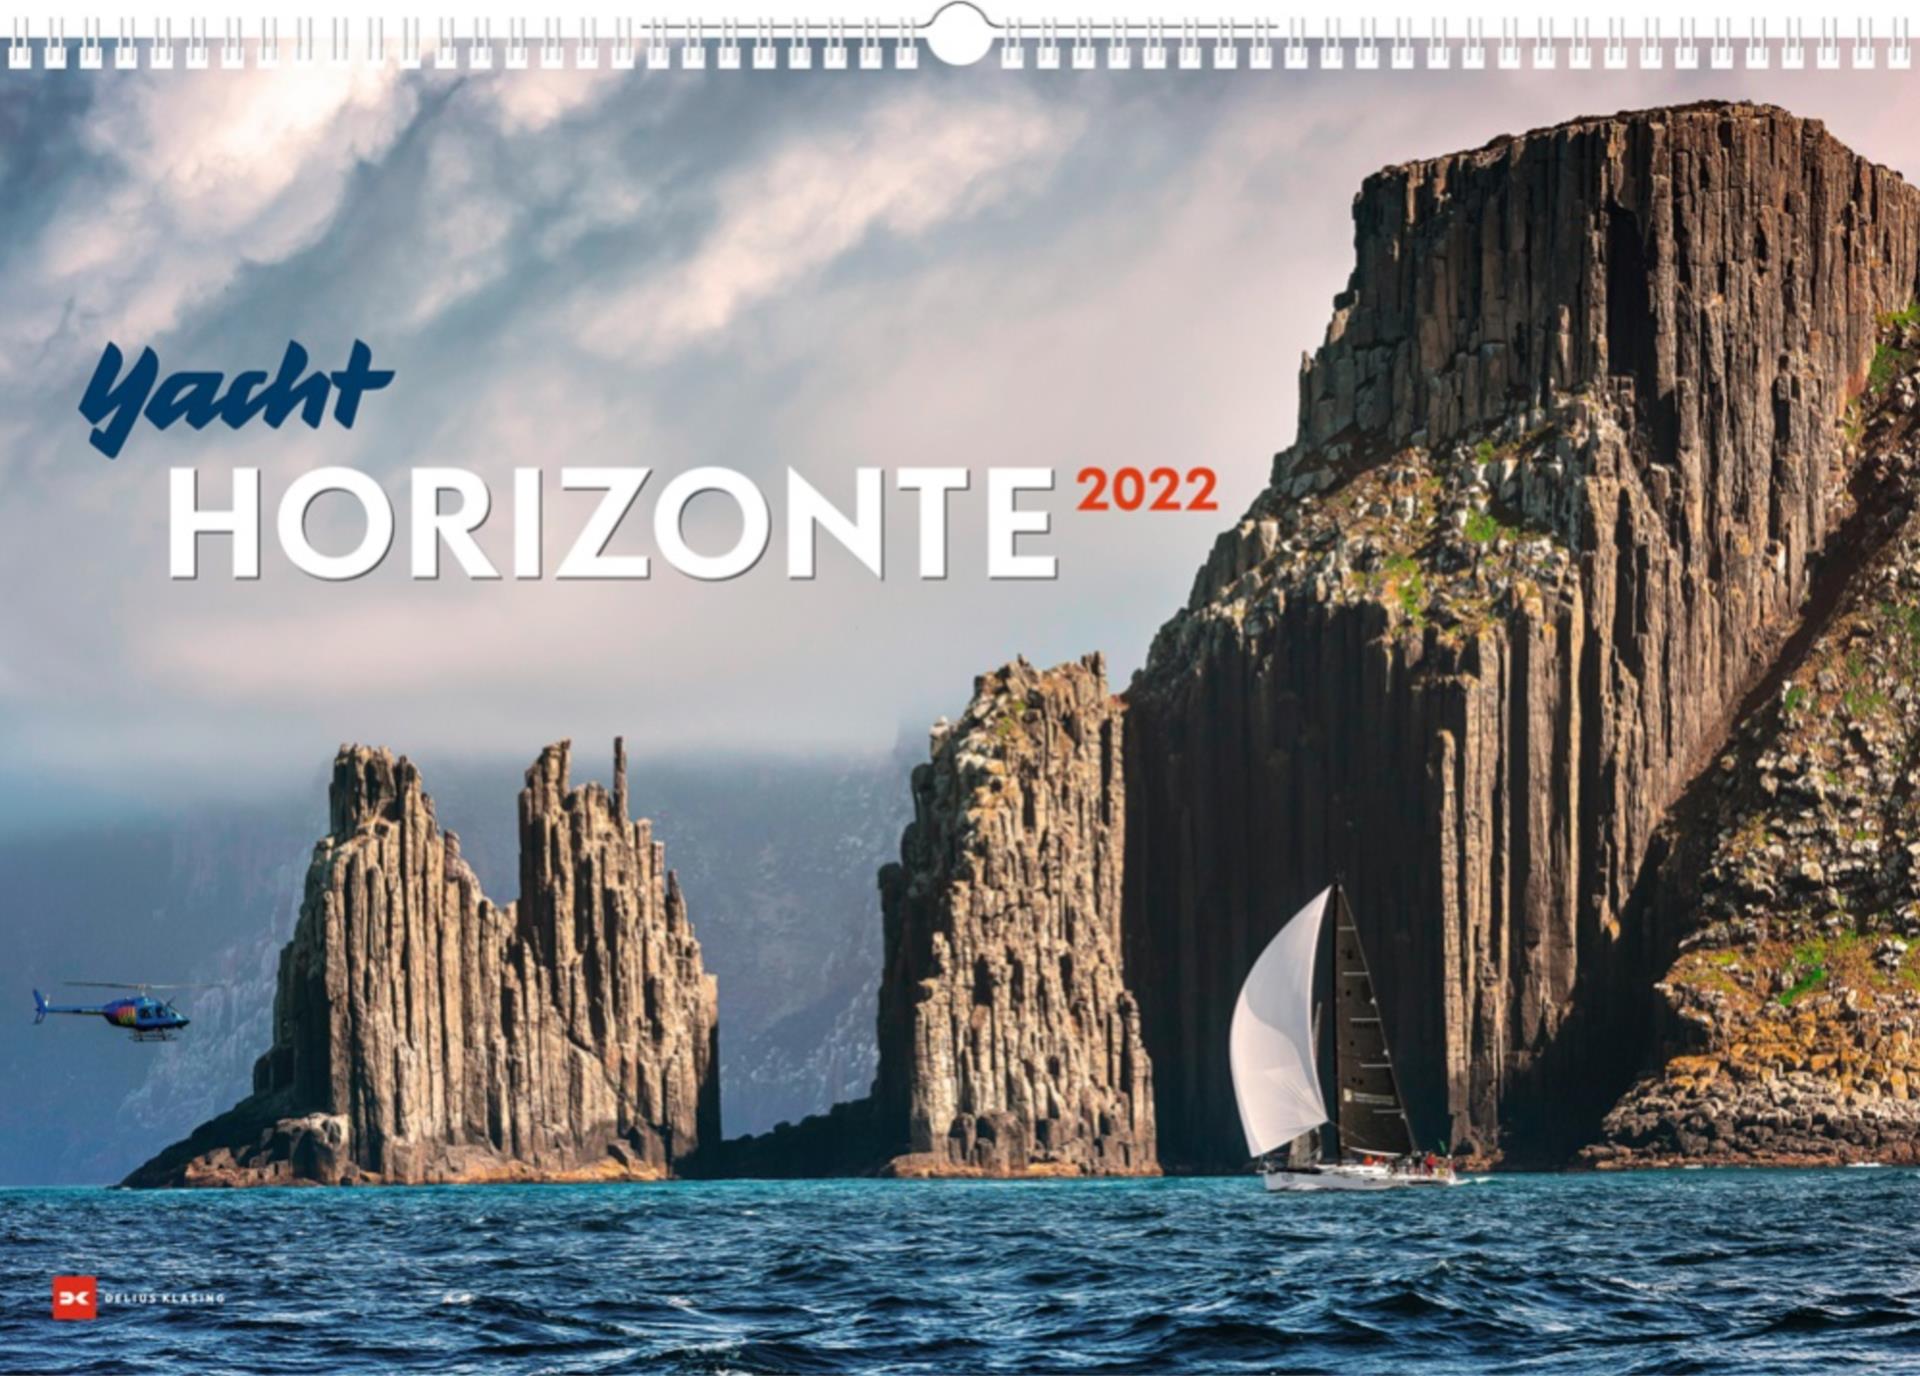 Kalender 2022 "Yacht Horizonte"